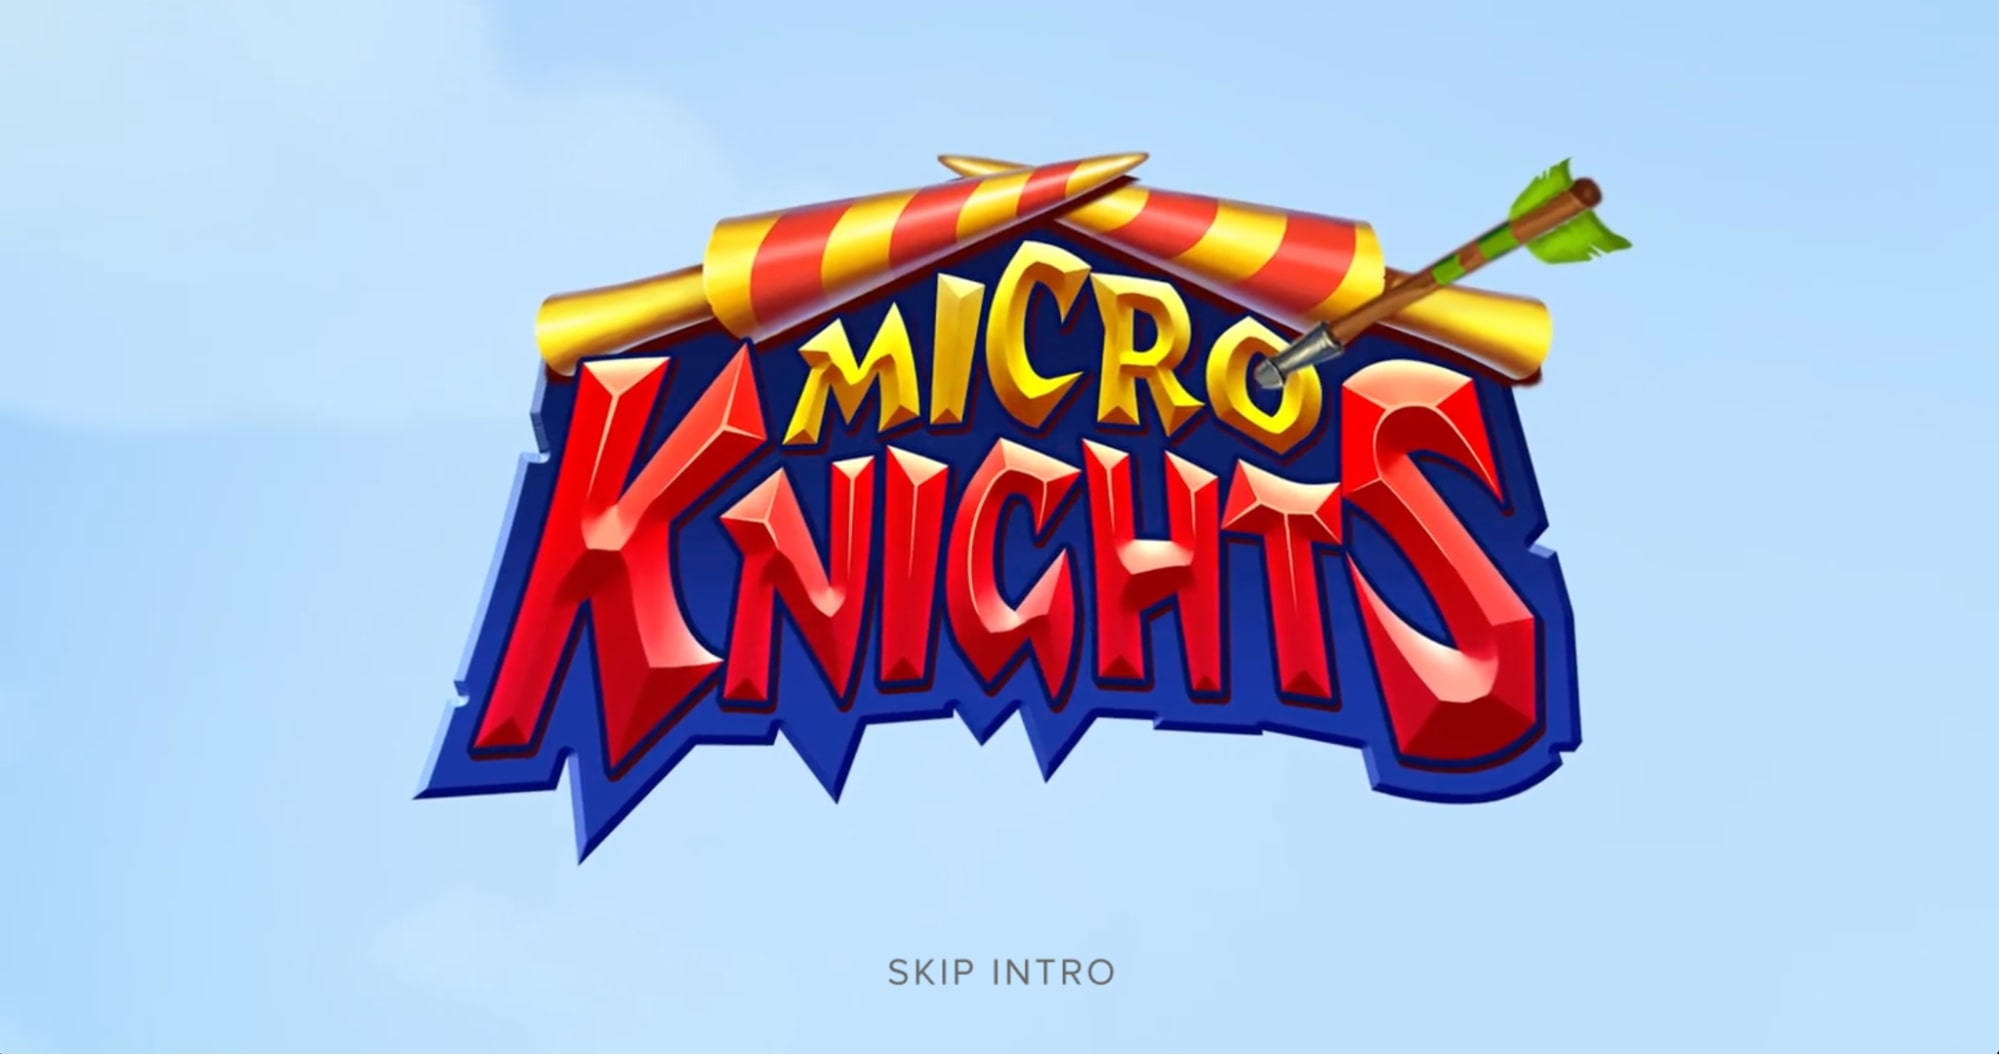 ELK Micro Knights Slot